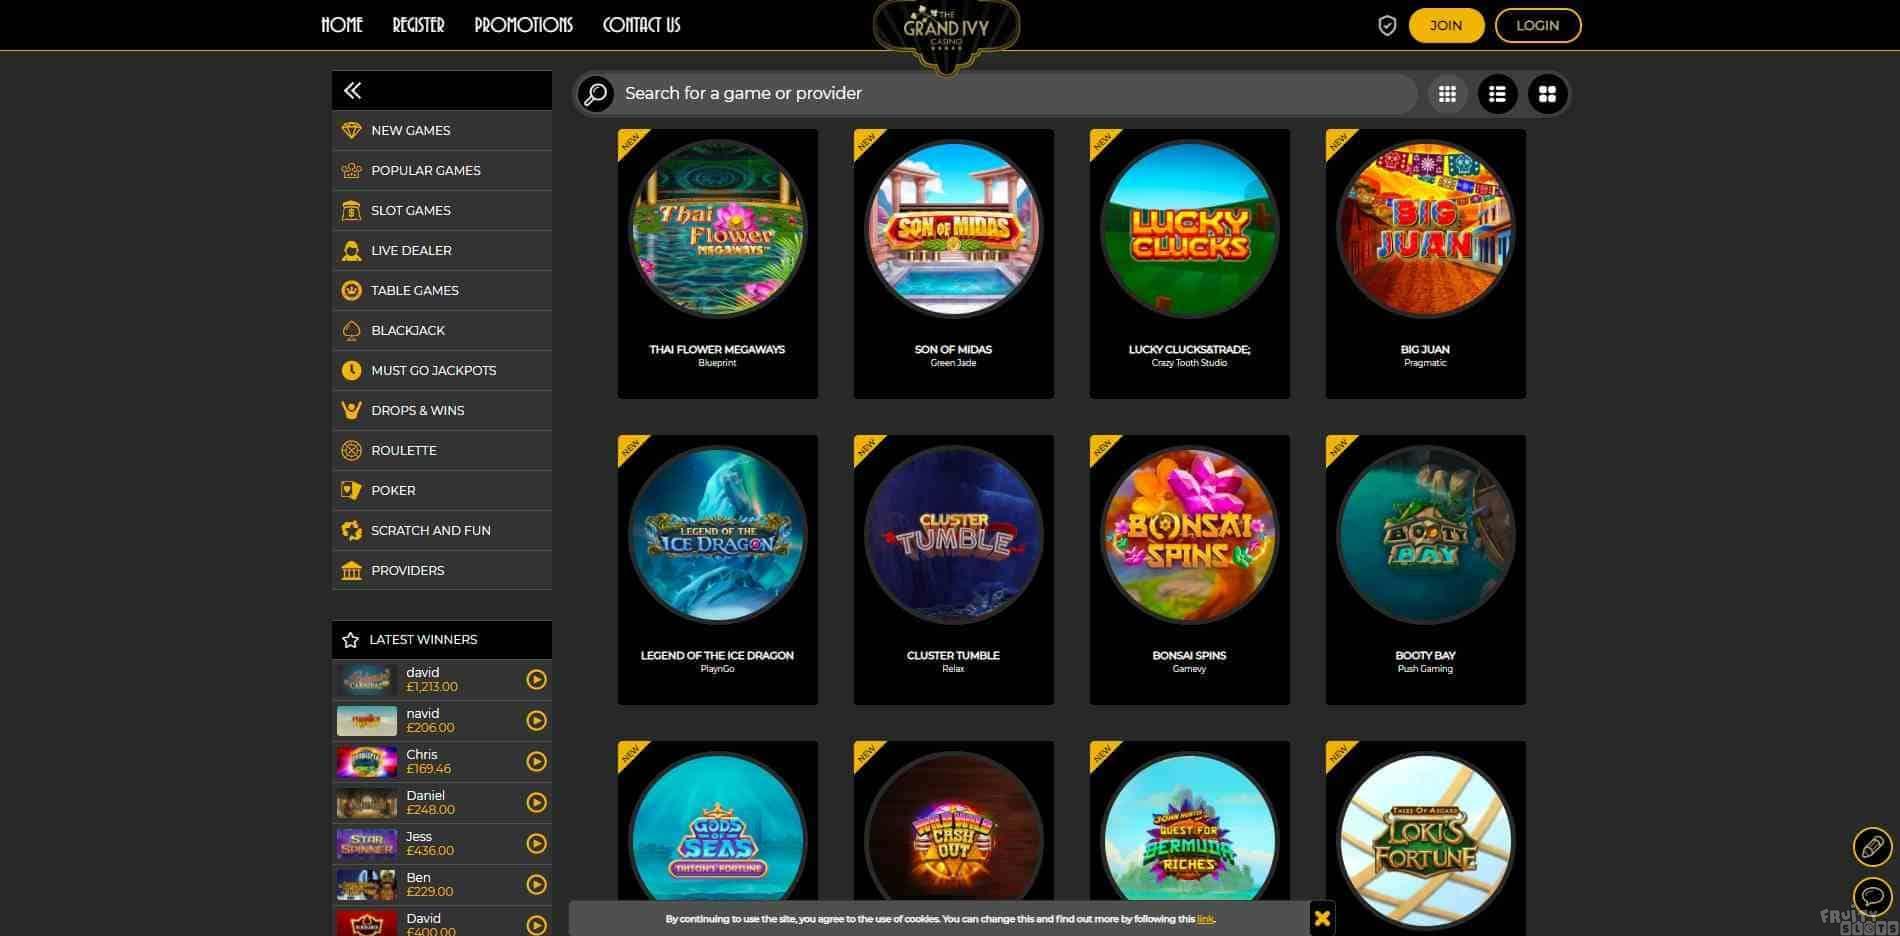 Grand IVY Casino slots